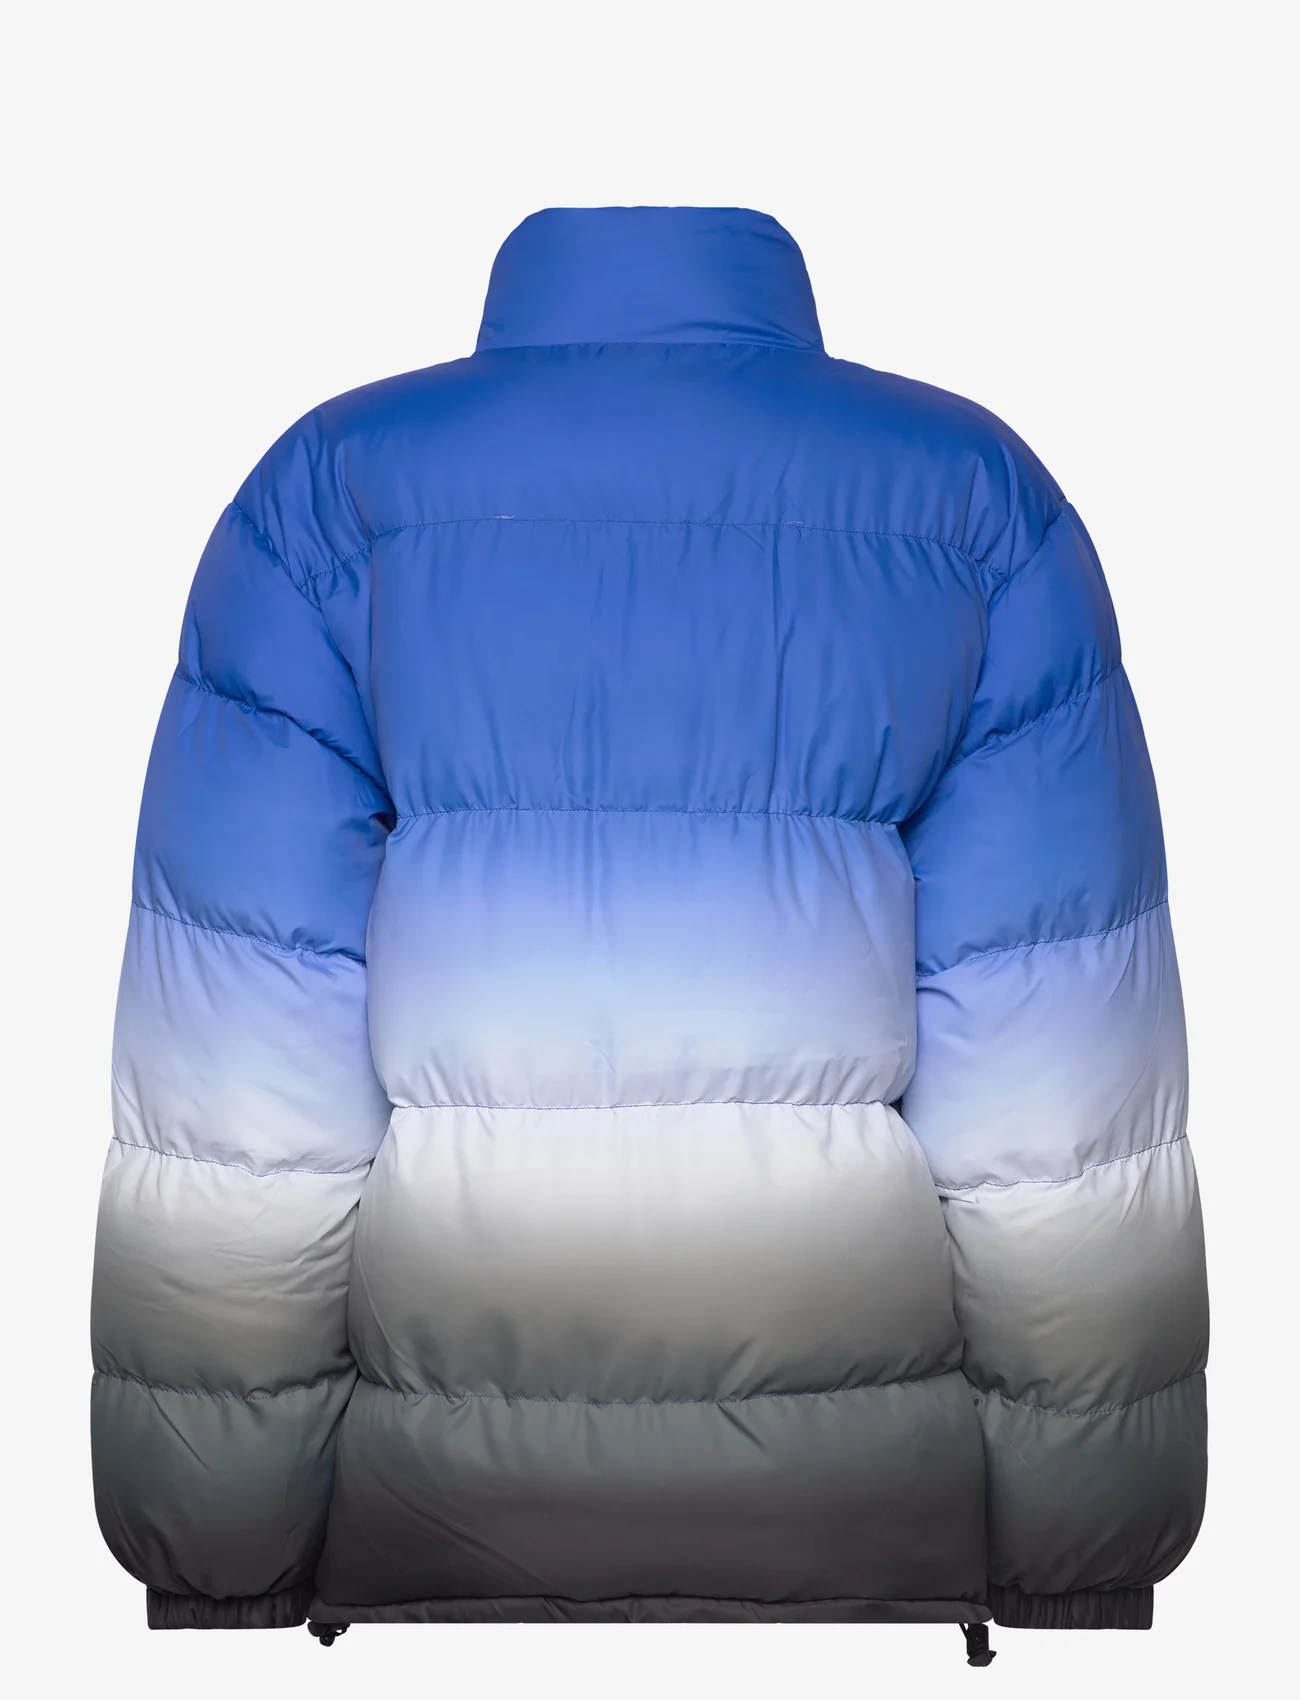 Lollys Laundry - Lockhart Down jacket - talvitakit - 20 blue - 1